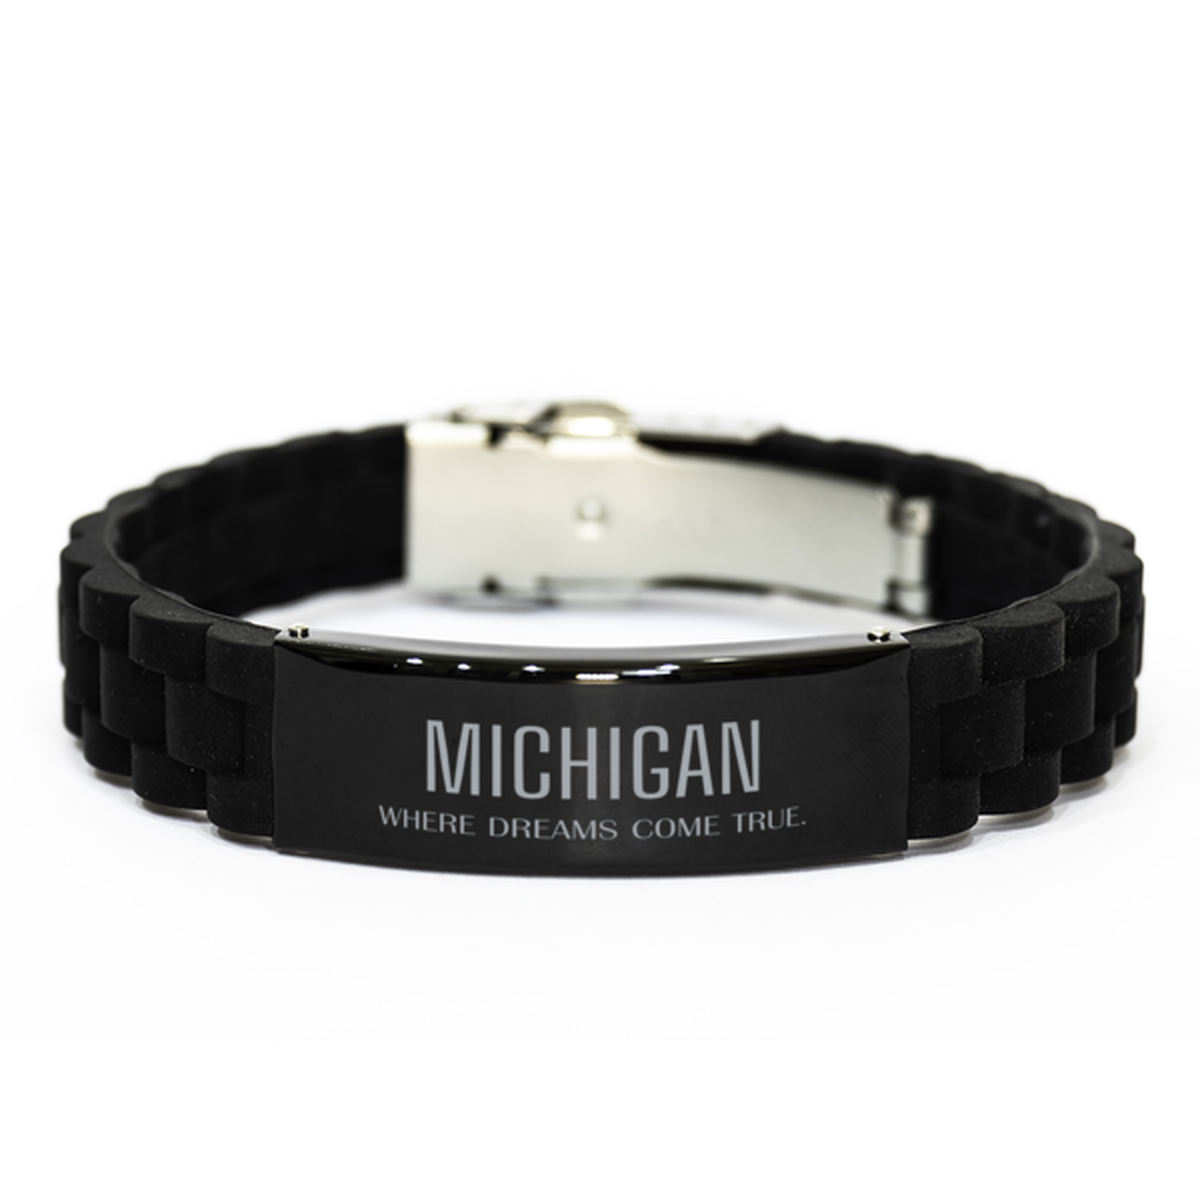 Love Michigan State Black Glidelock Clasp Bracelet, Michigan Where dreams come true, Birthday Inspirational Gifts For Michigan Men, Women, Friends